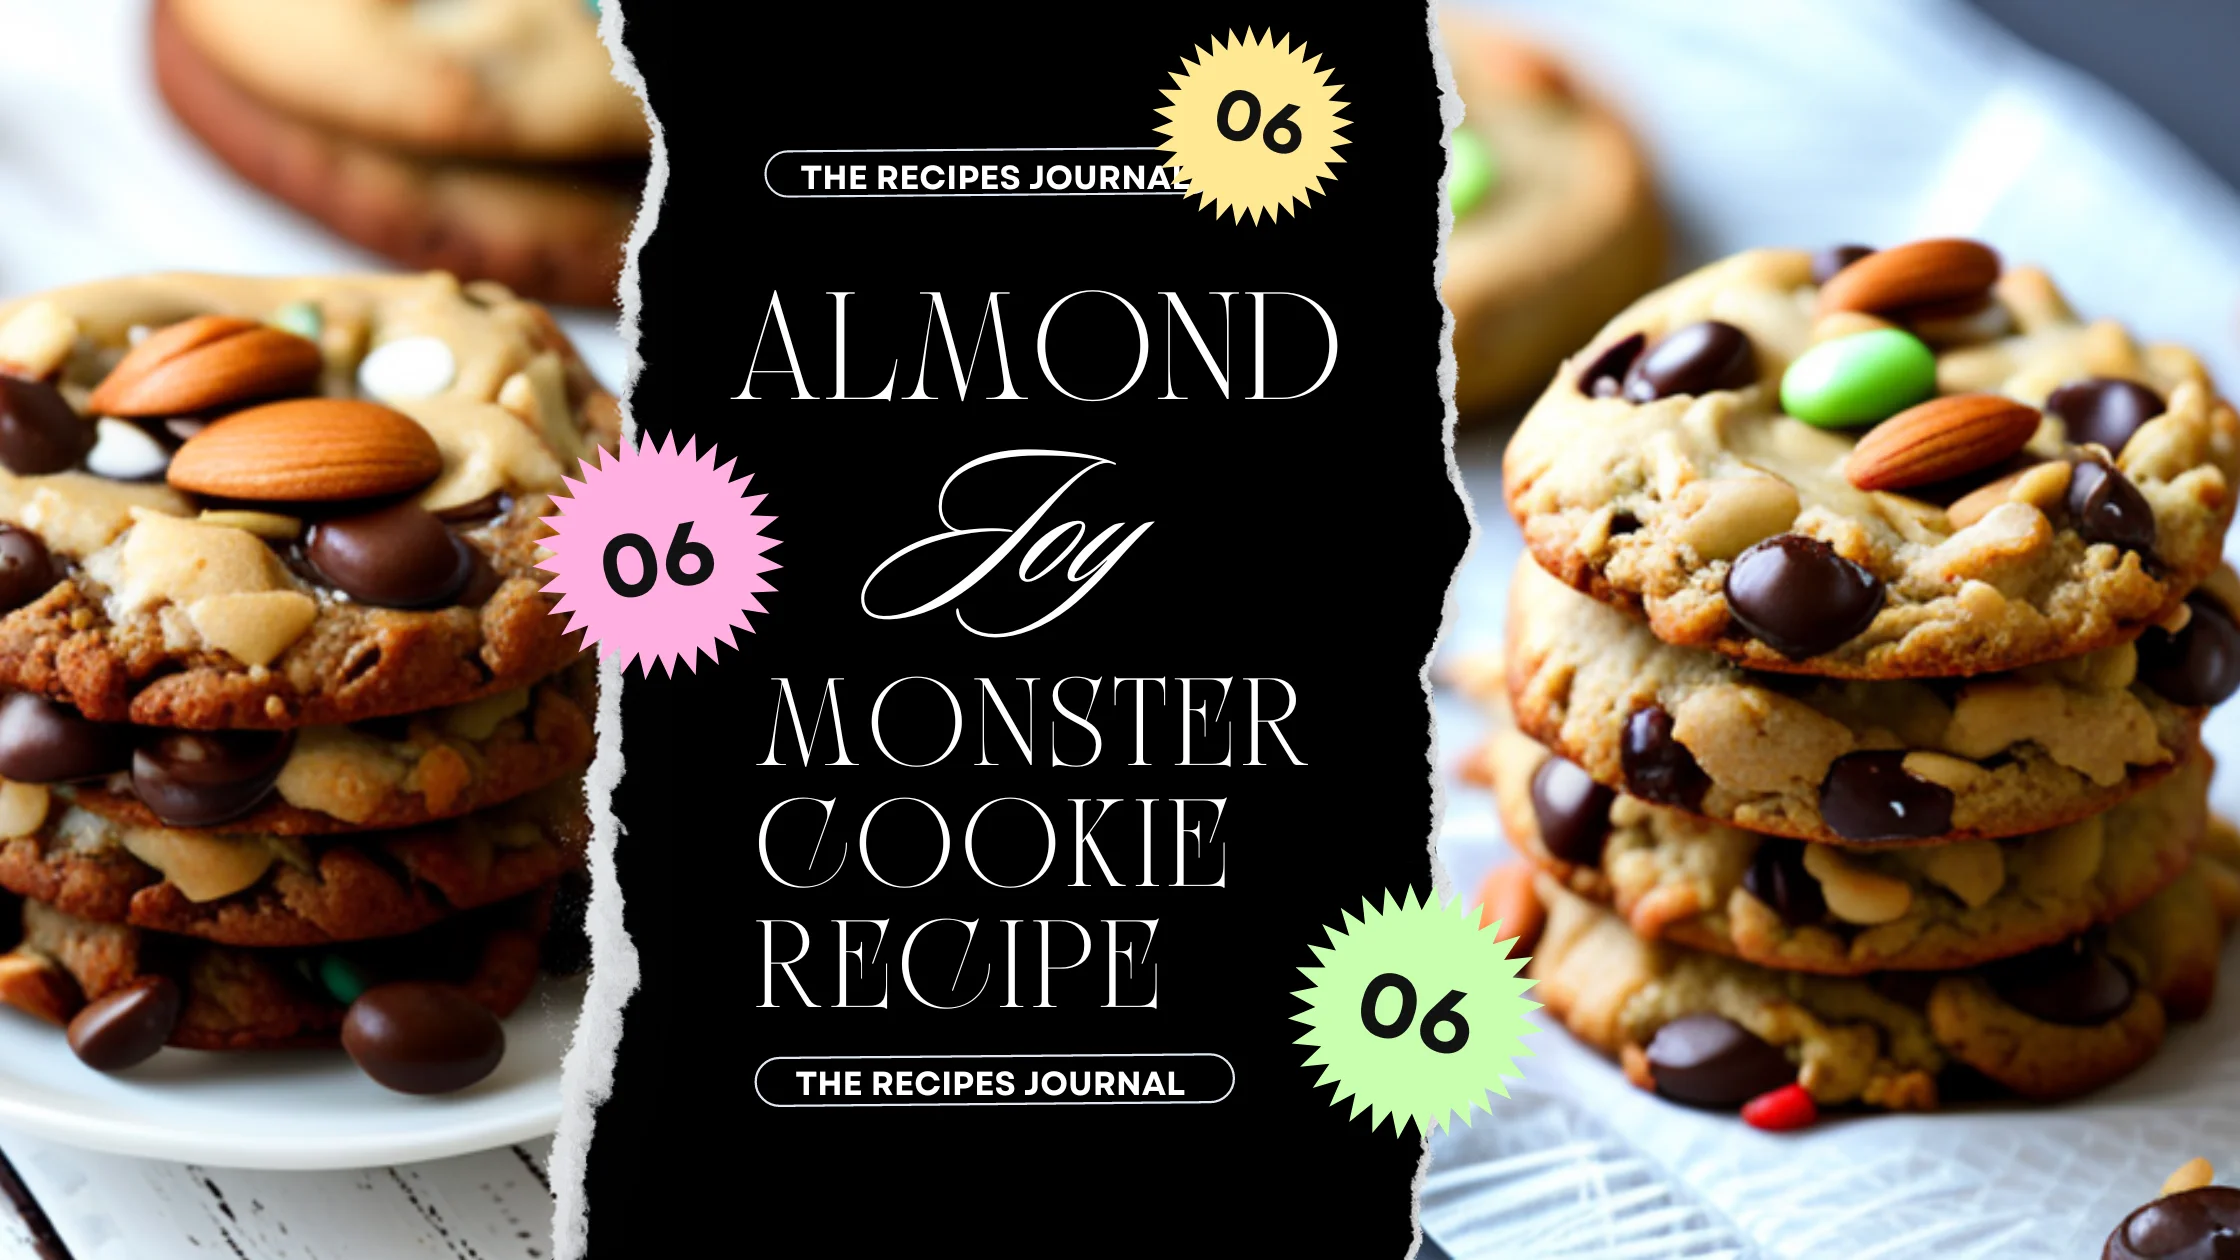 Almond Joy Monster Cookie Recipe : Taste #06